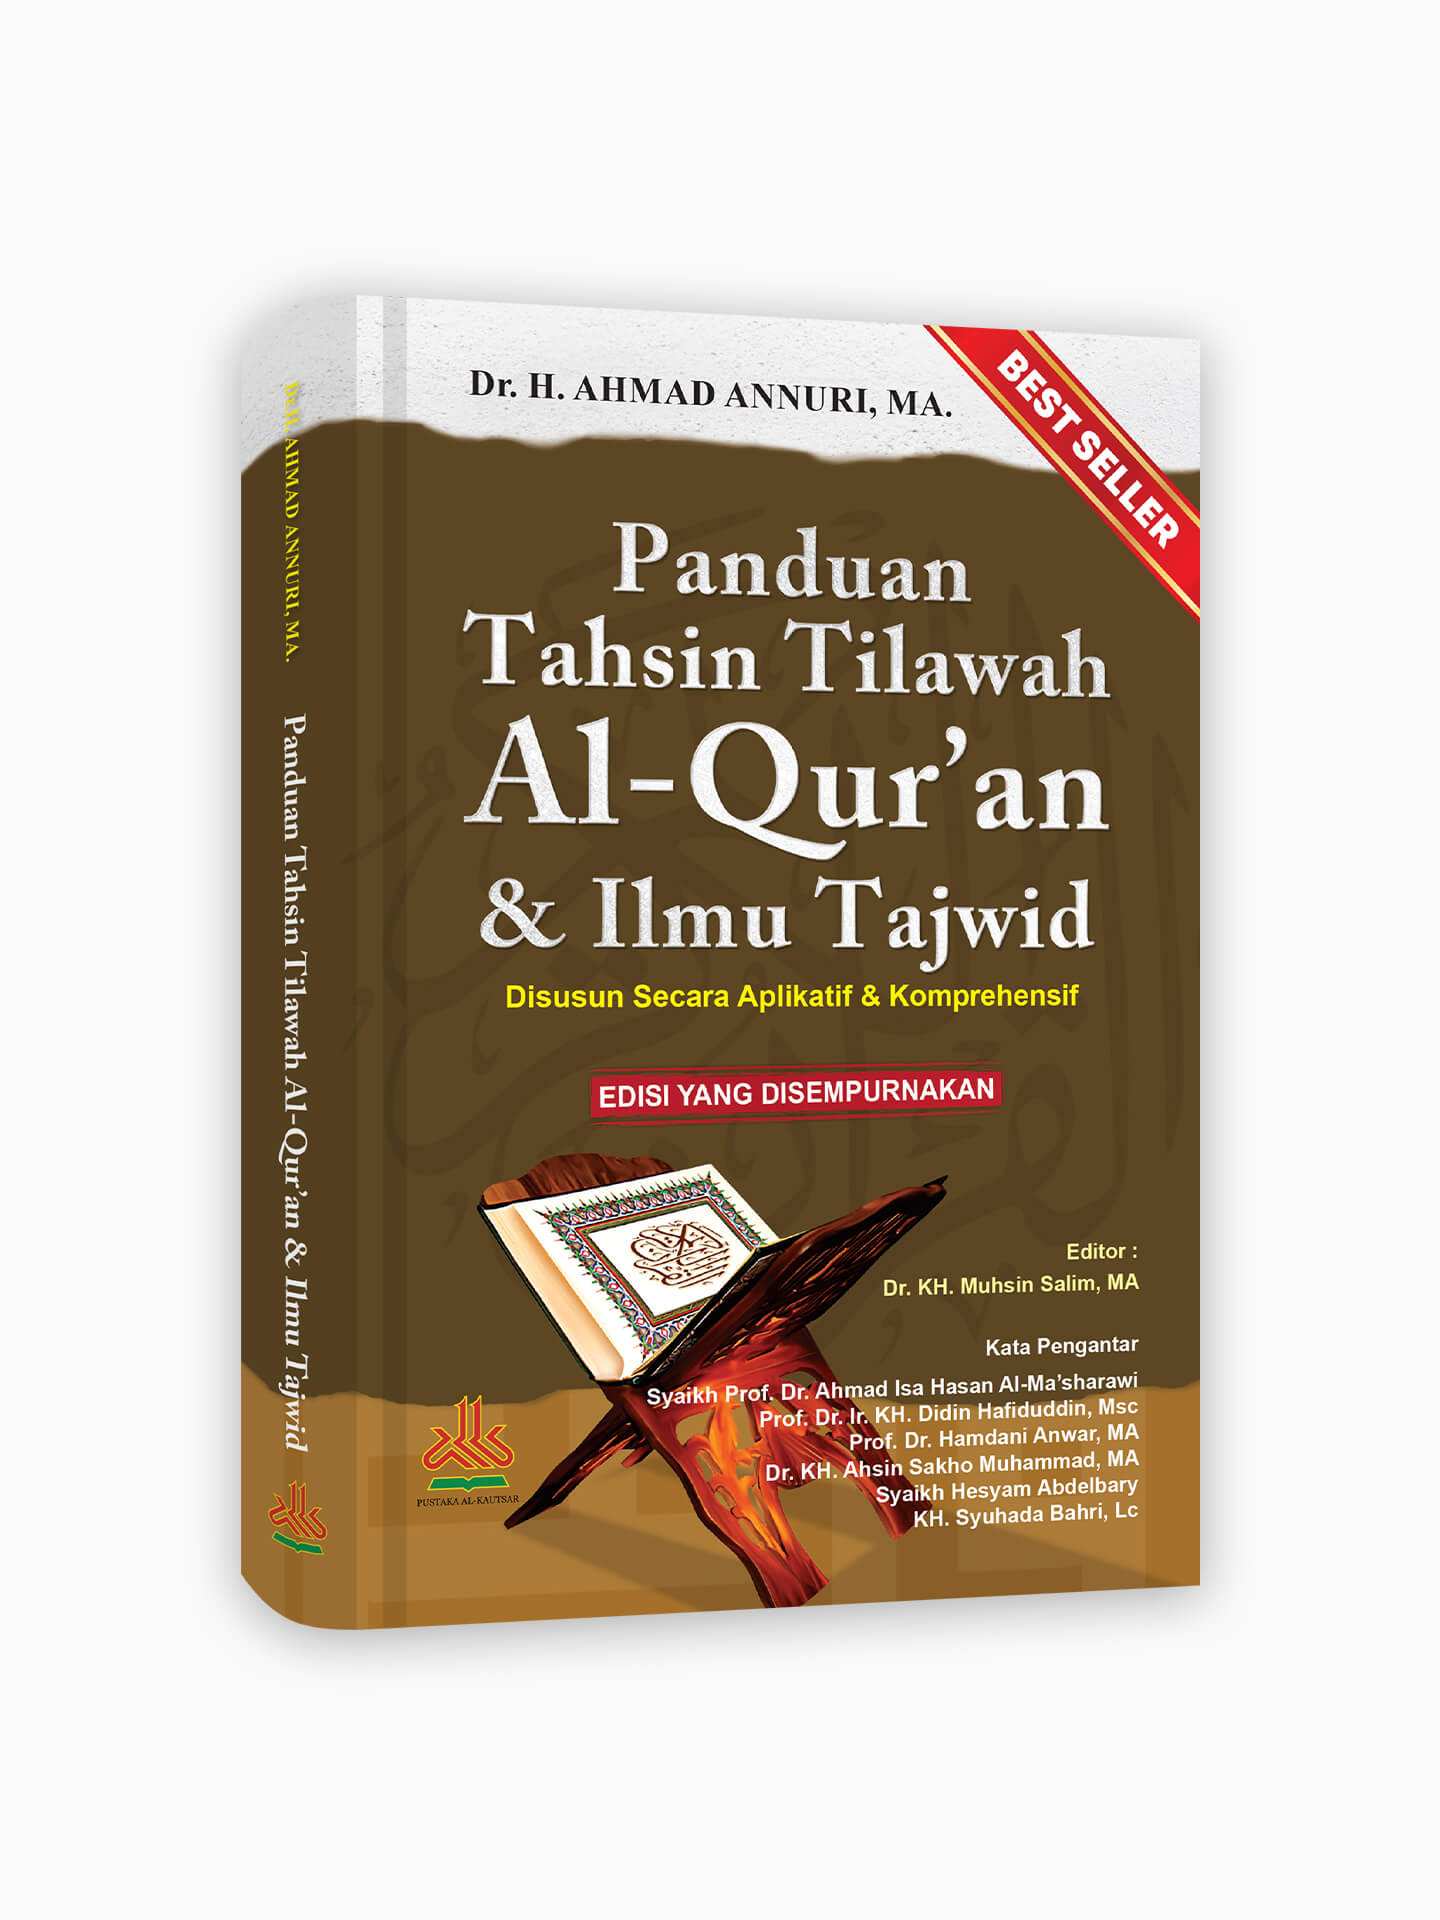 Panduan Tahsin Tilawah Al-Qur'an & Ilmu Tajwid